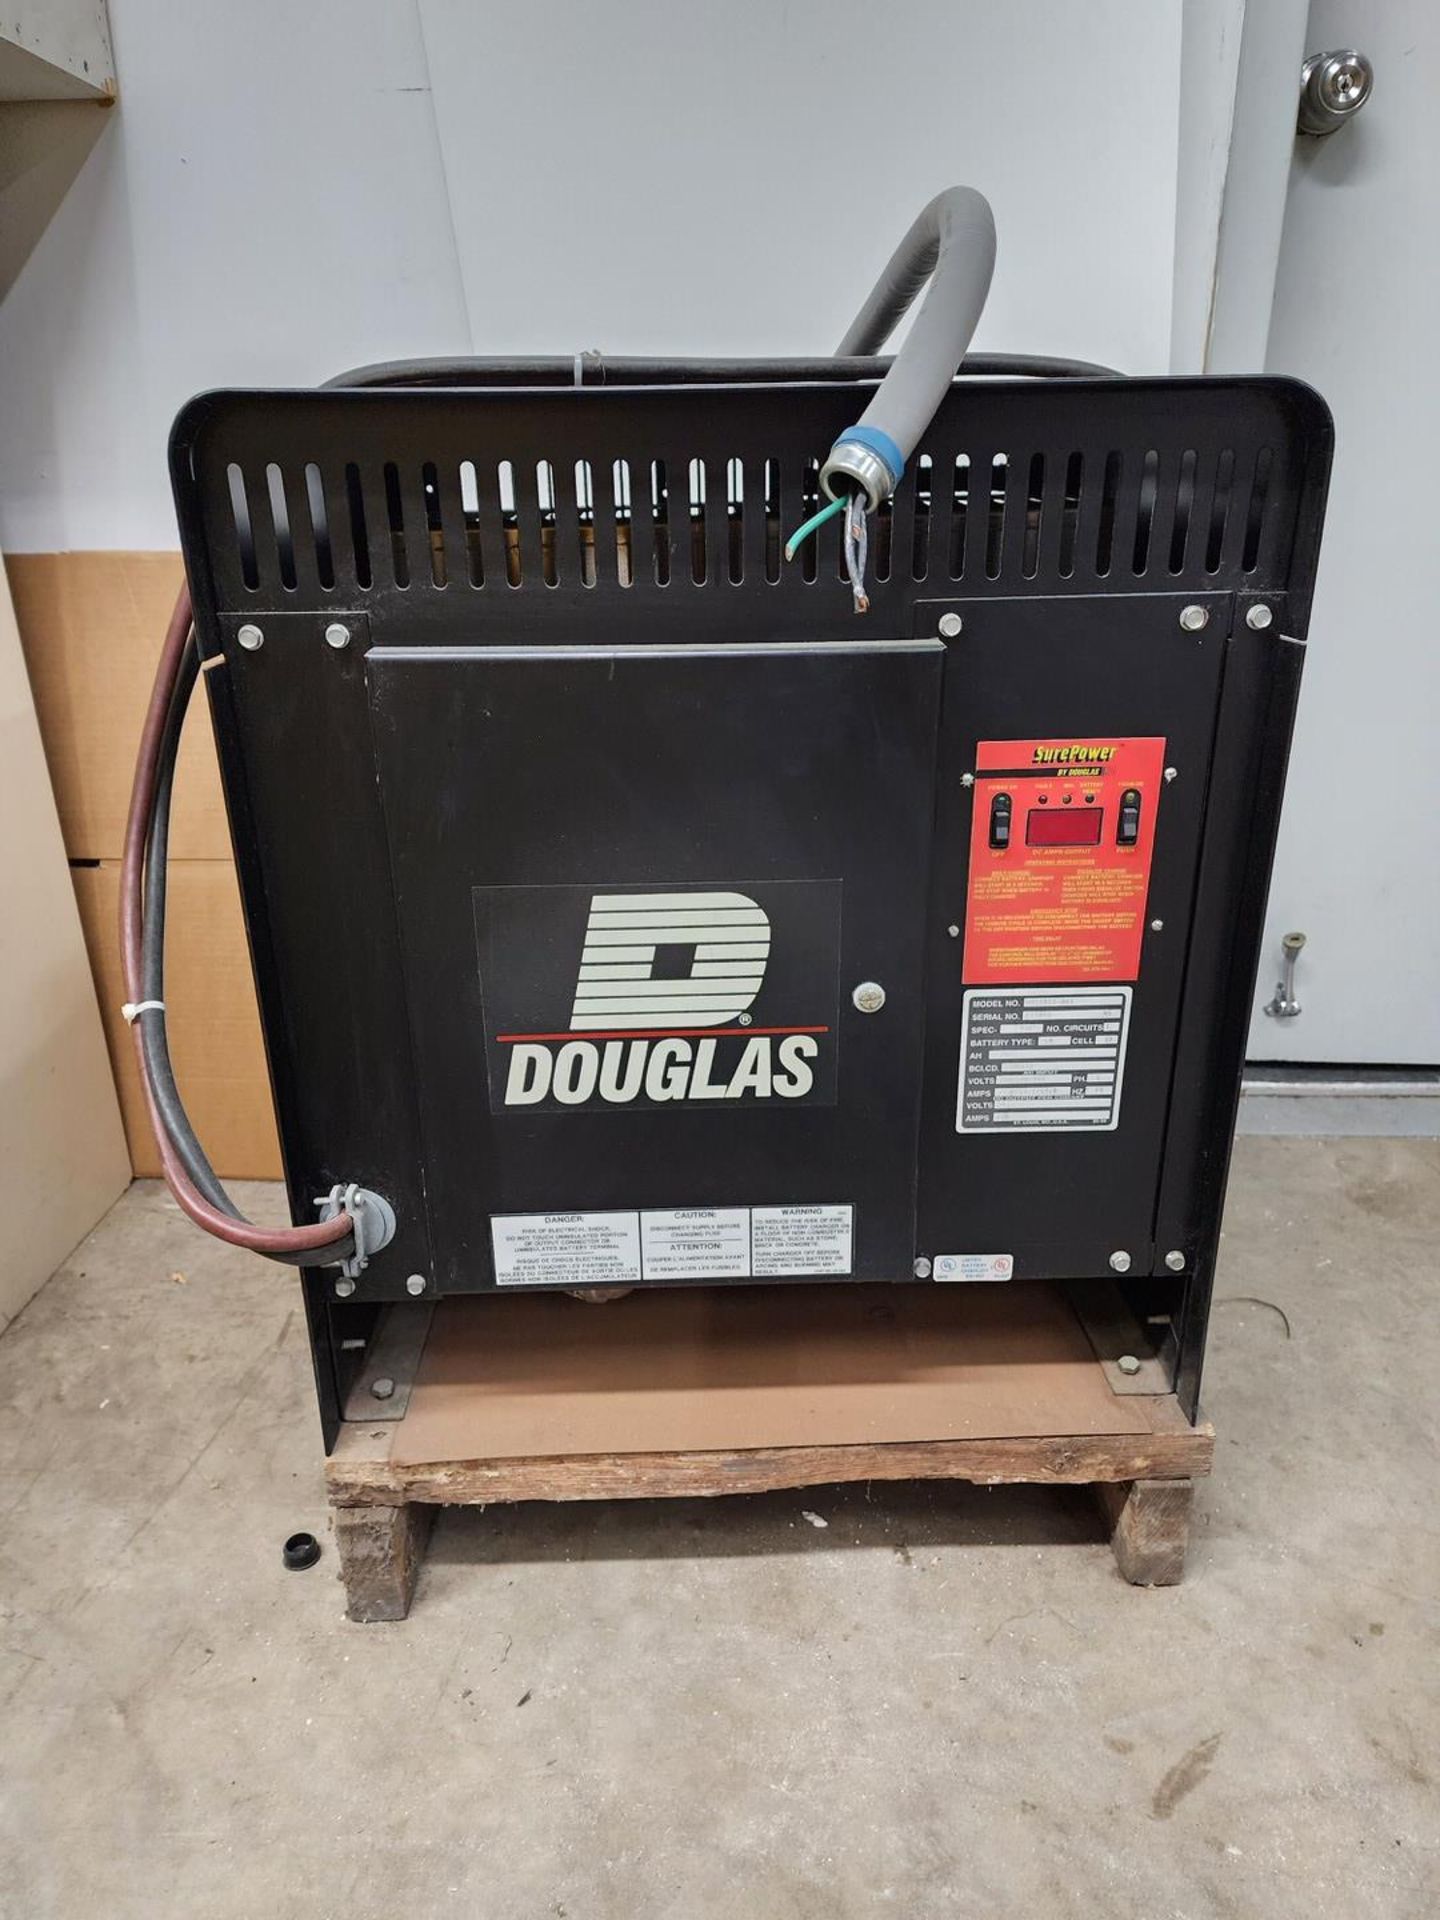 Douglas DBS1B12-865 Forklift Battery (Parts Only) 208/240/480V, 1PH, 60HZ, 23.1/20.1/10.0A